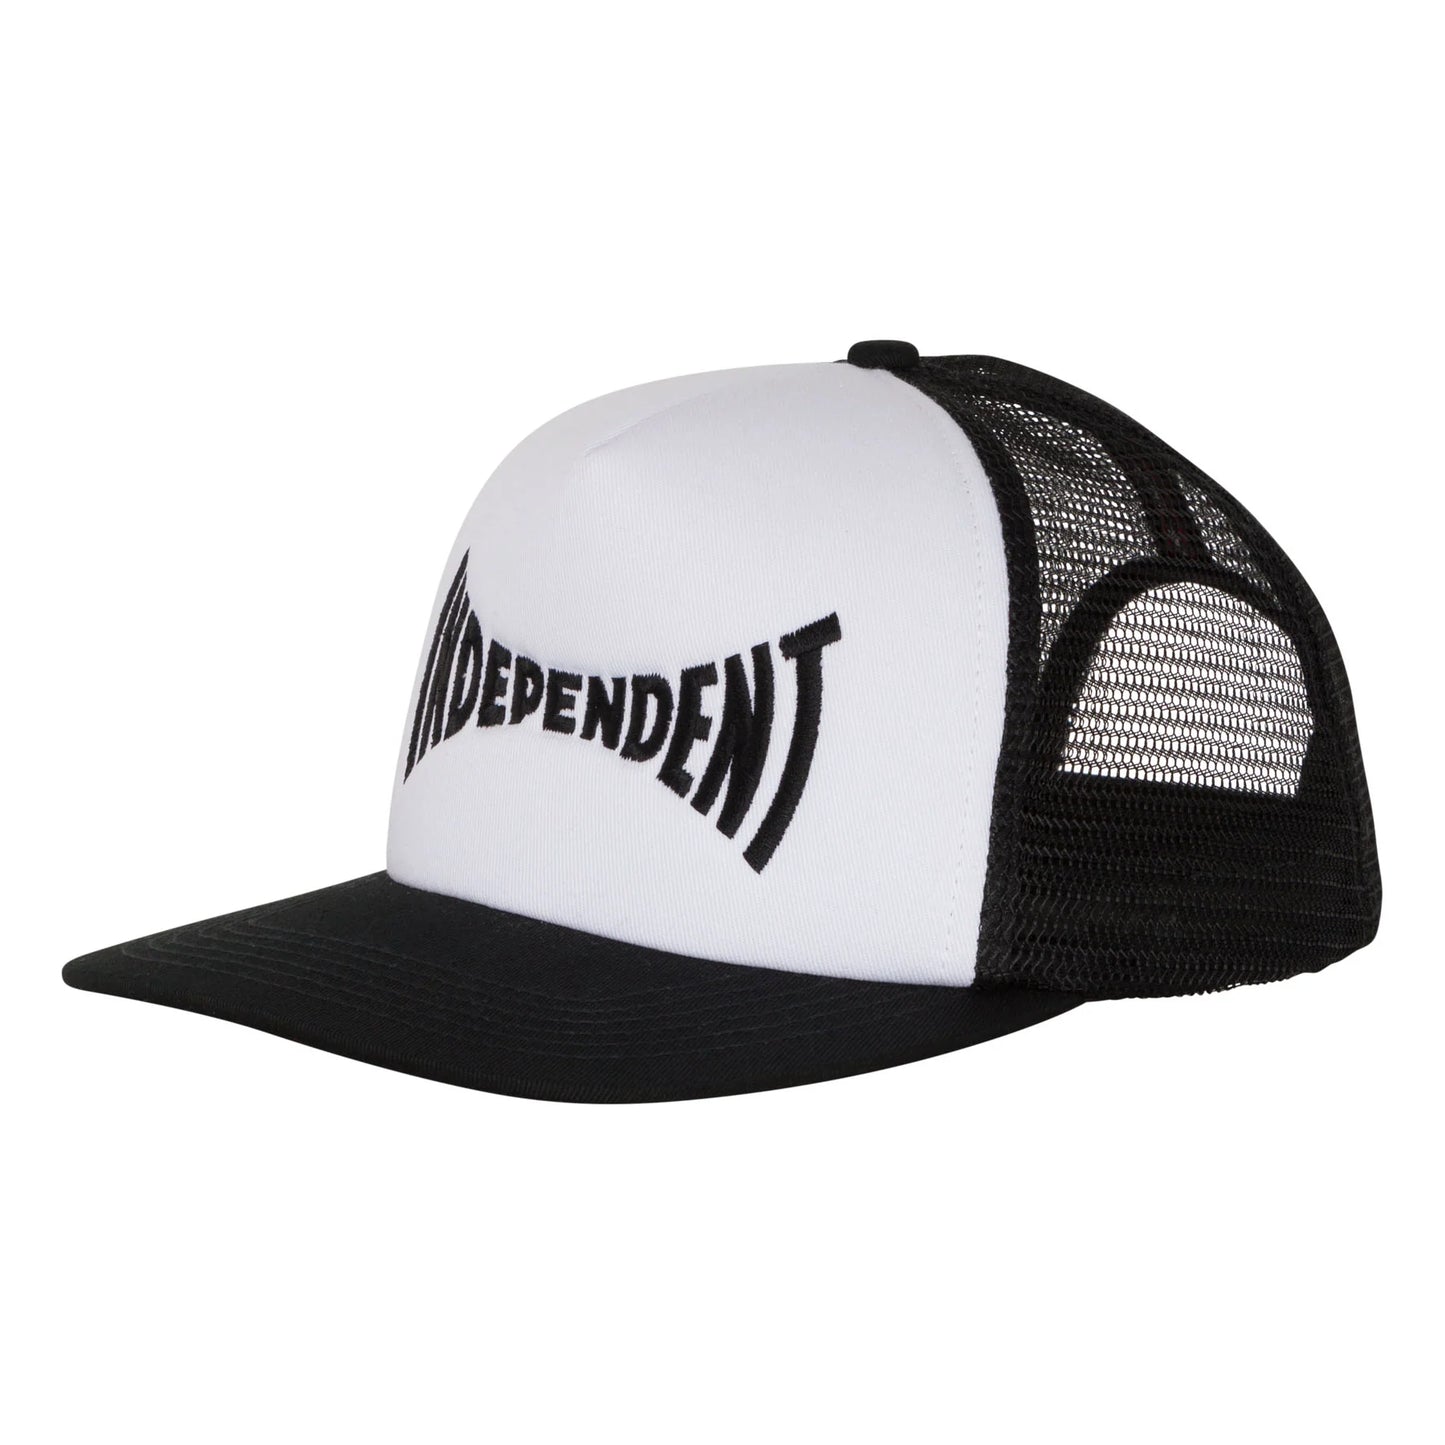 Independent Span Mesh Trucker Hat - White/Black